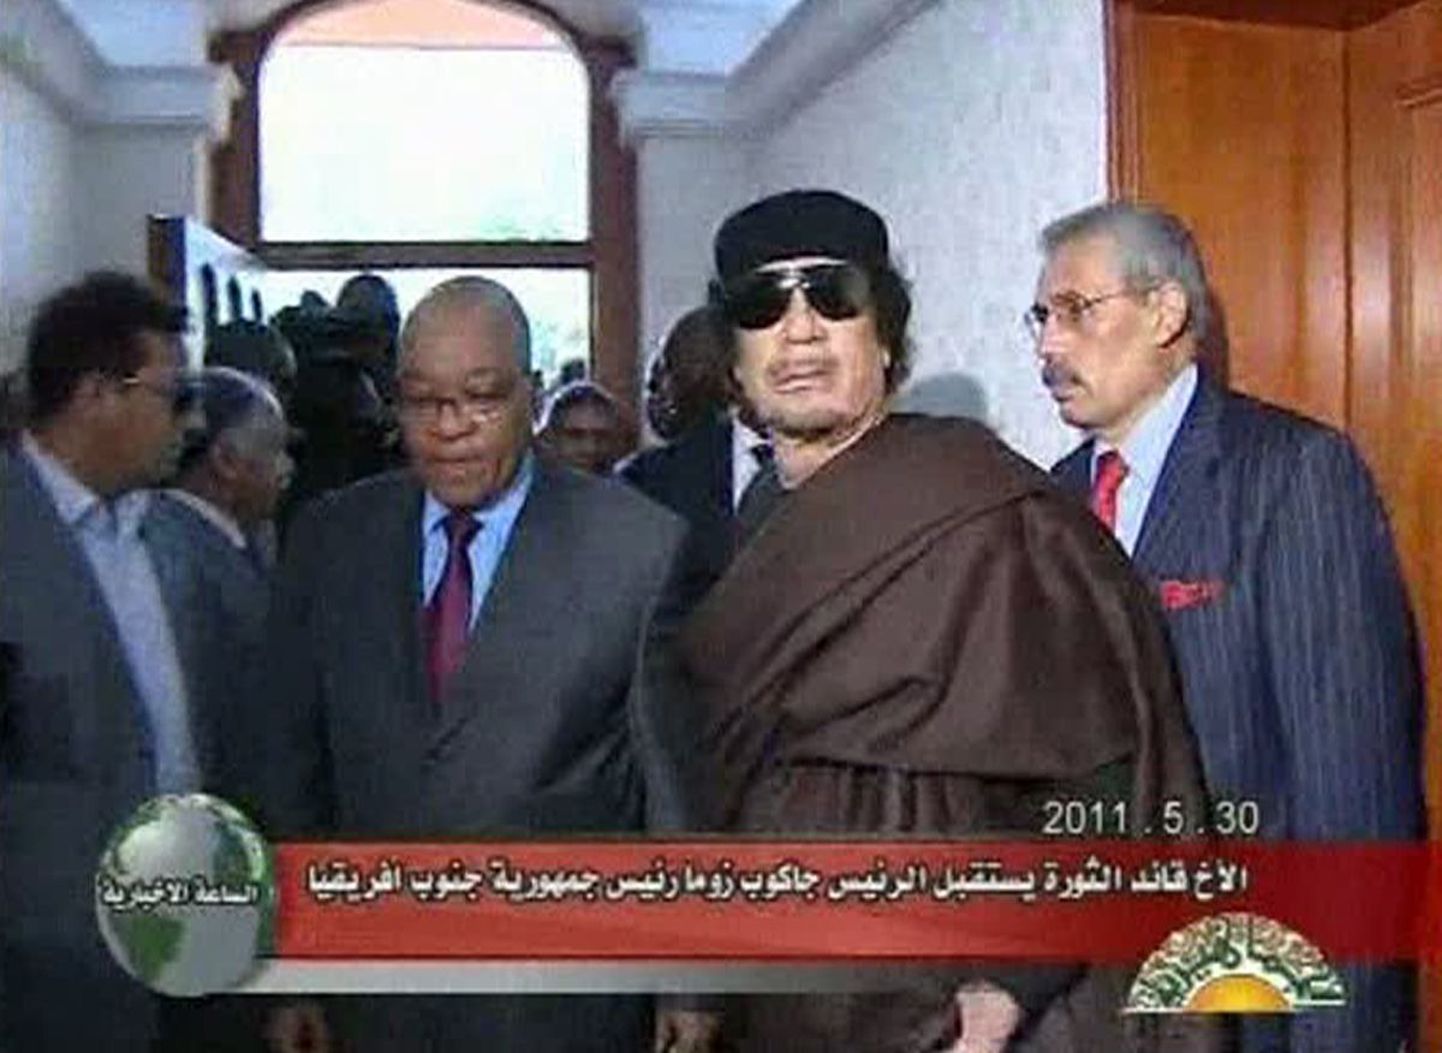 Liibüa juht Muammar al-Gaddafi ja Lõuna-Aafrika Vabariigi president Jacob Zuma